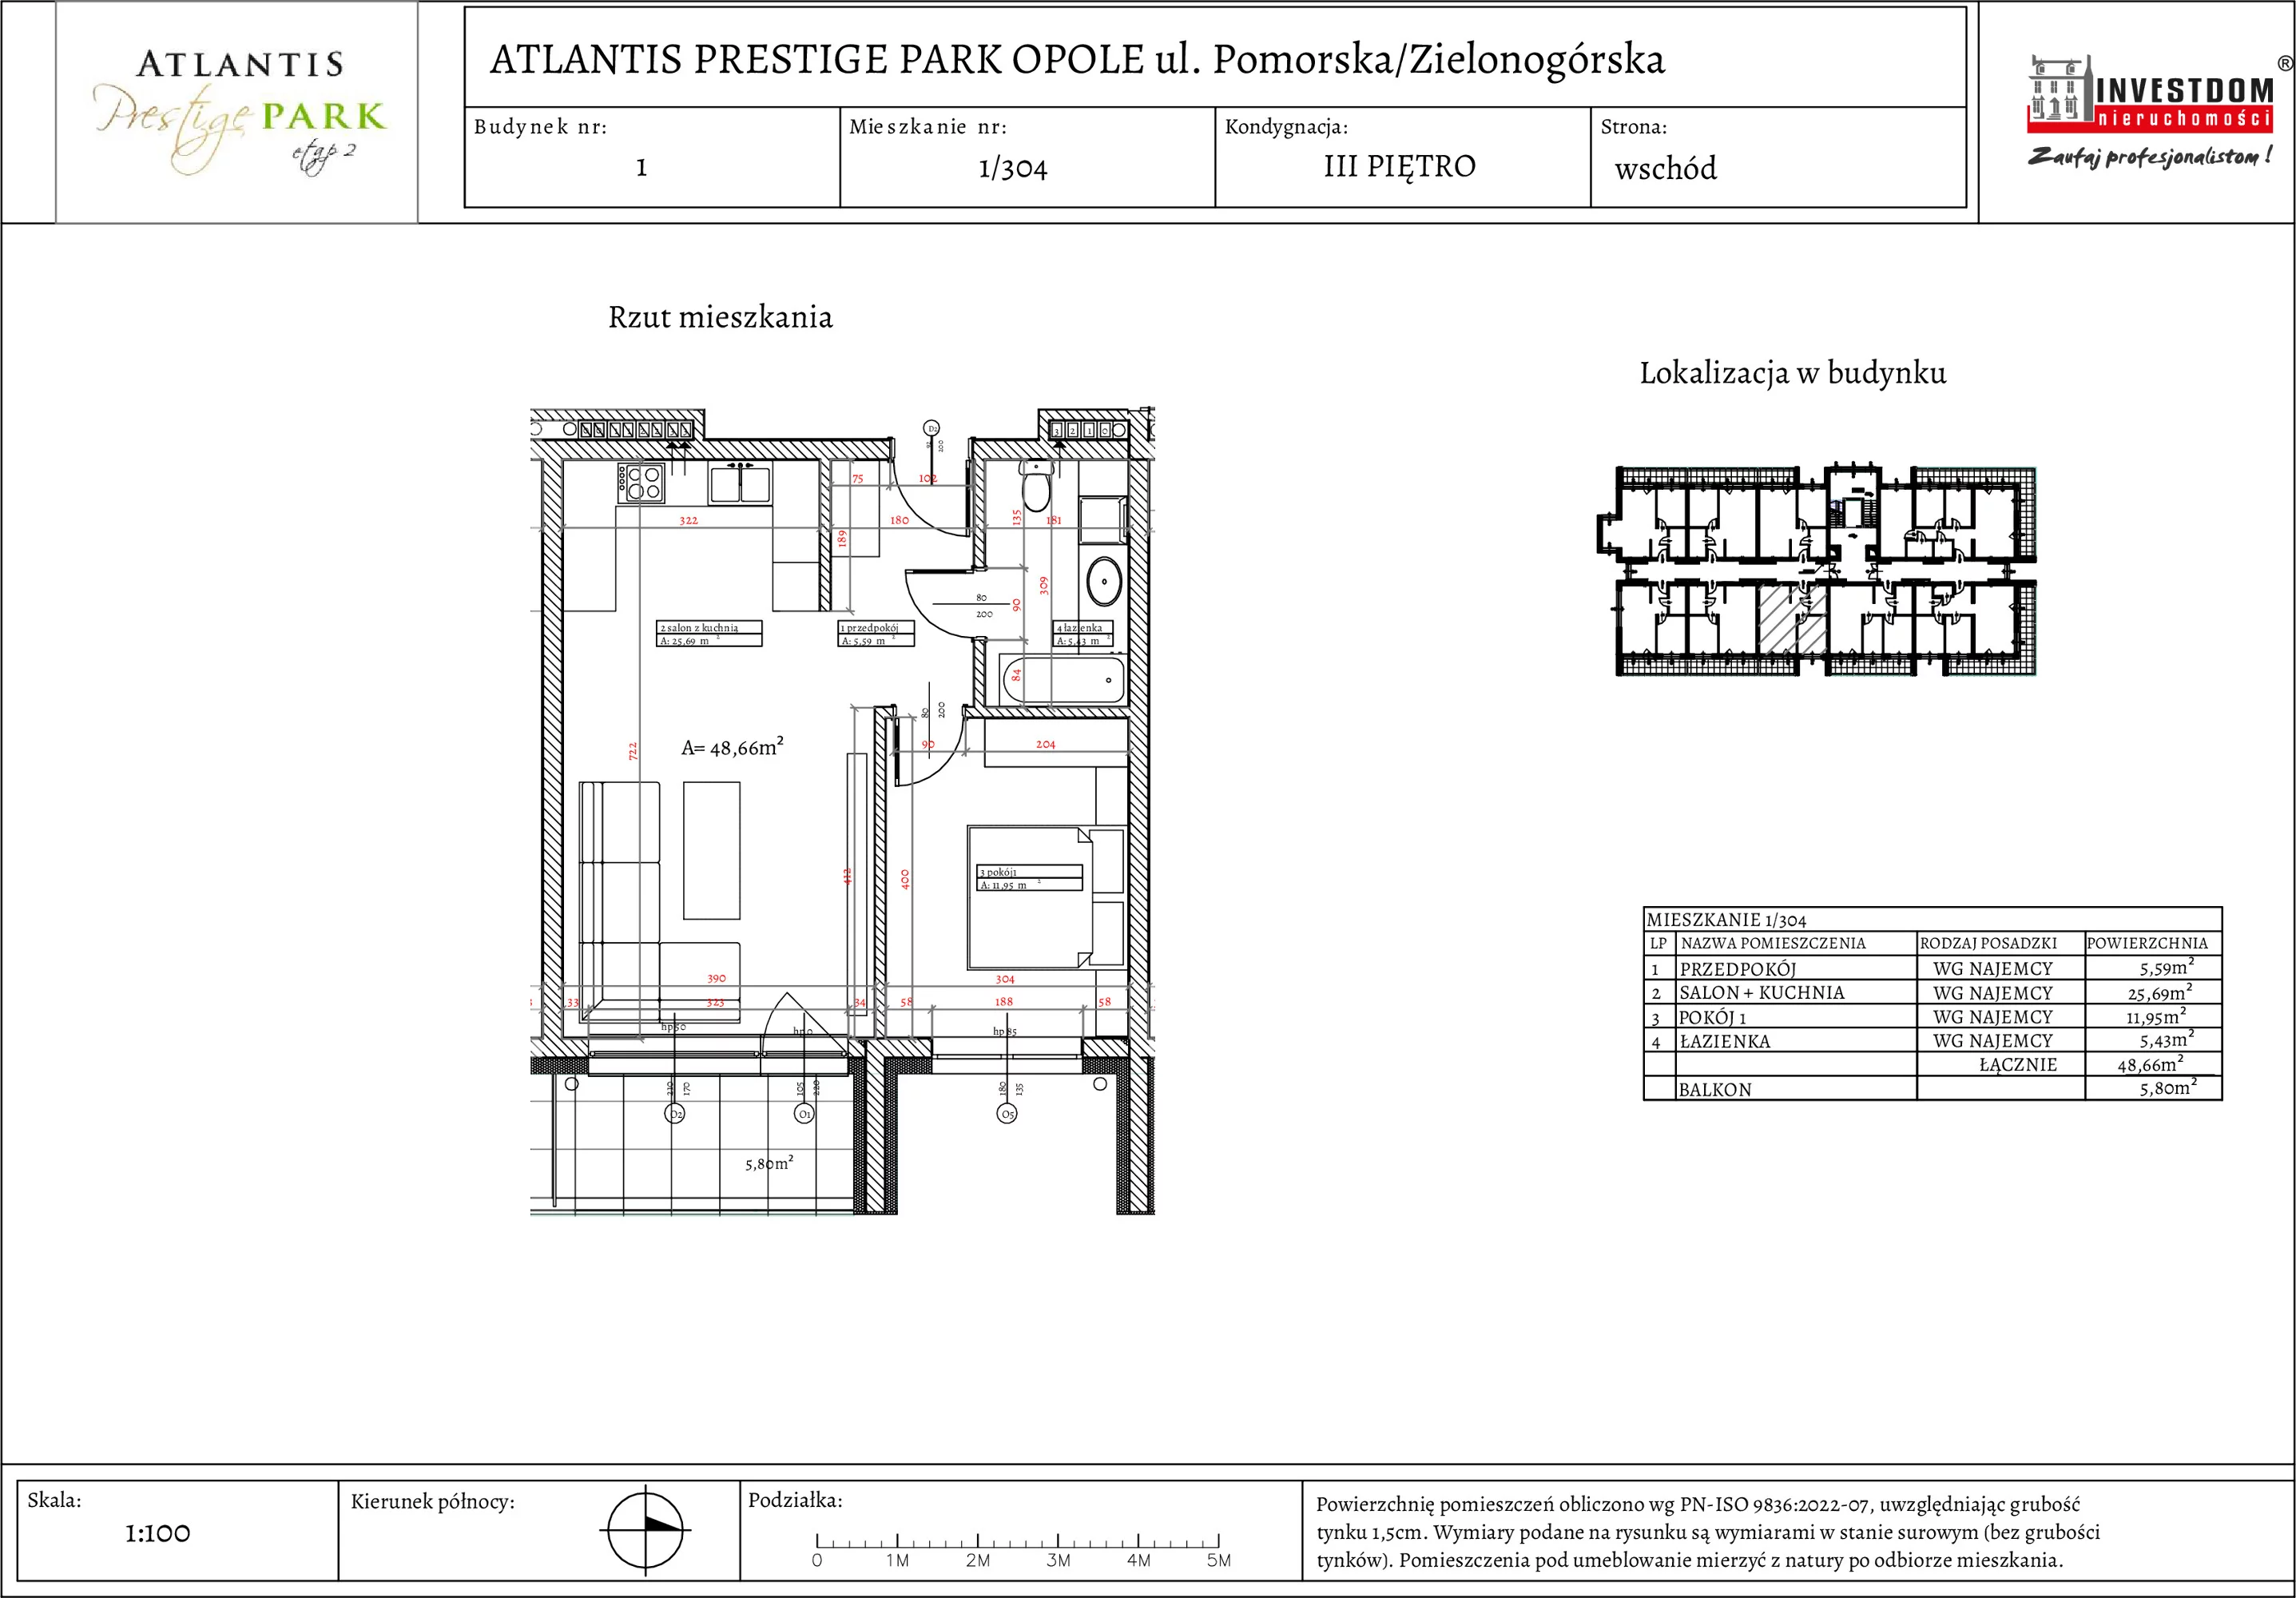 Apartament 48,66 m², piętro 3, oferta nr 1/304, Atlantis Prestige Park, Opole, Malinka, ul. Pomorska / Zielonogórska / Harcmistrza Kamińskiego